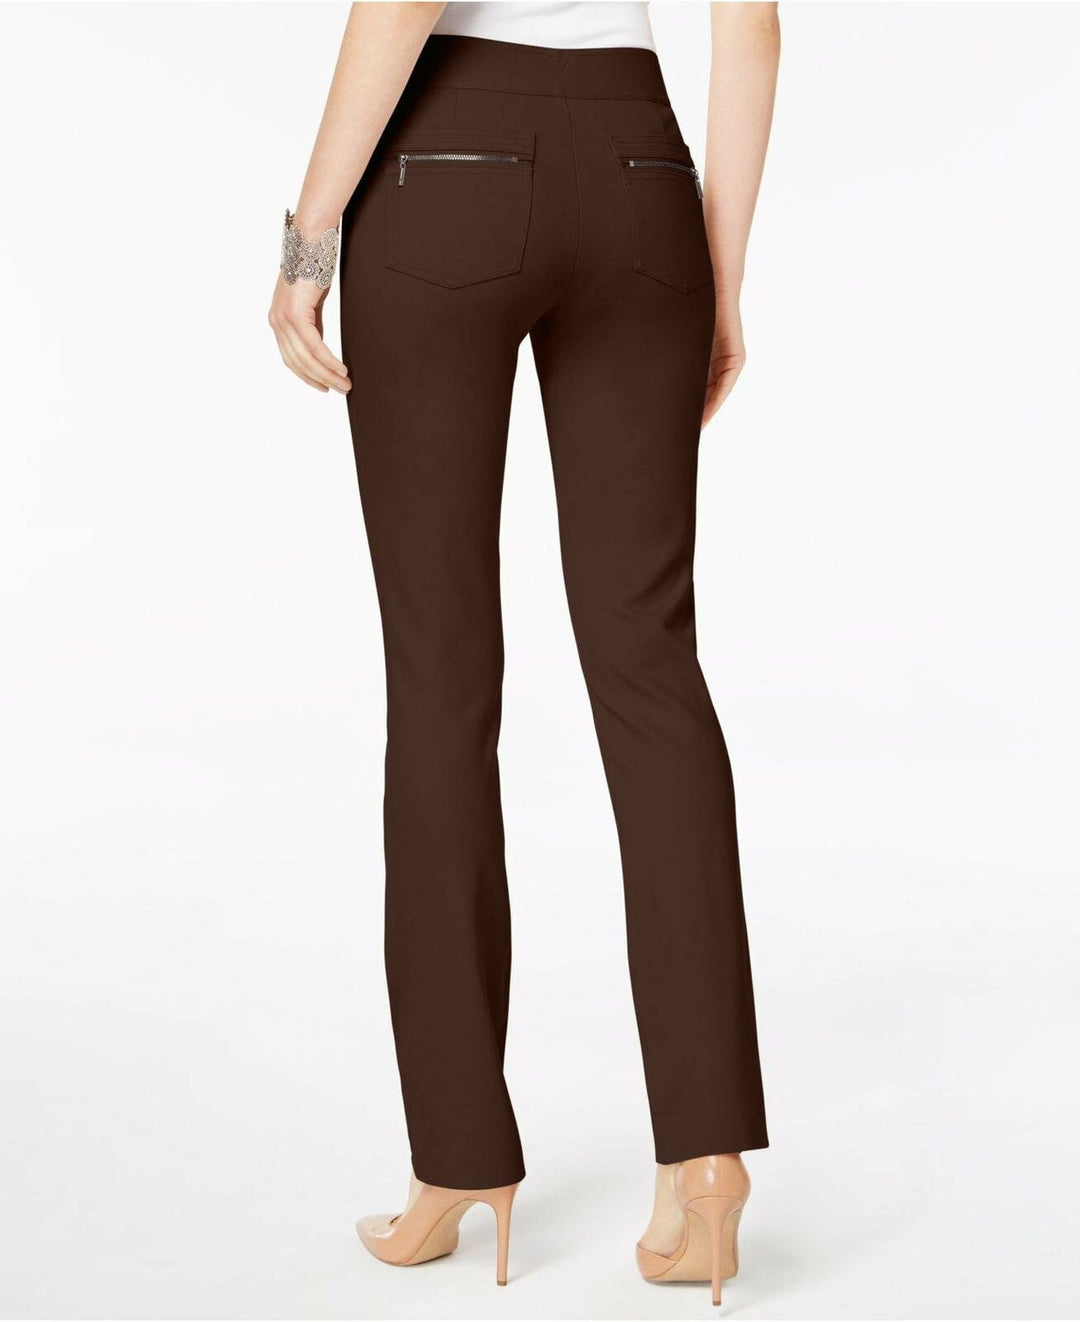 INC International Concepts Women's Straight Leg Casual Trouser Pants Brown Size 18